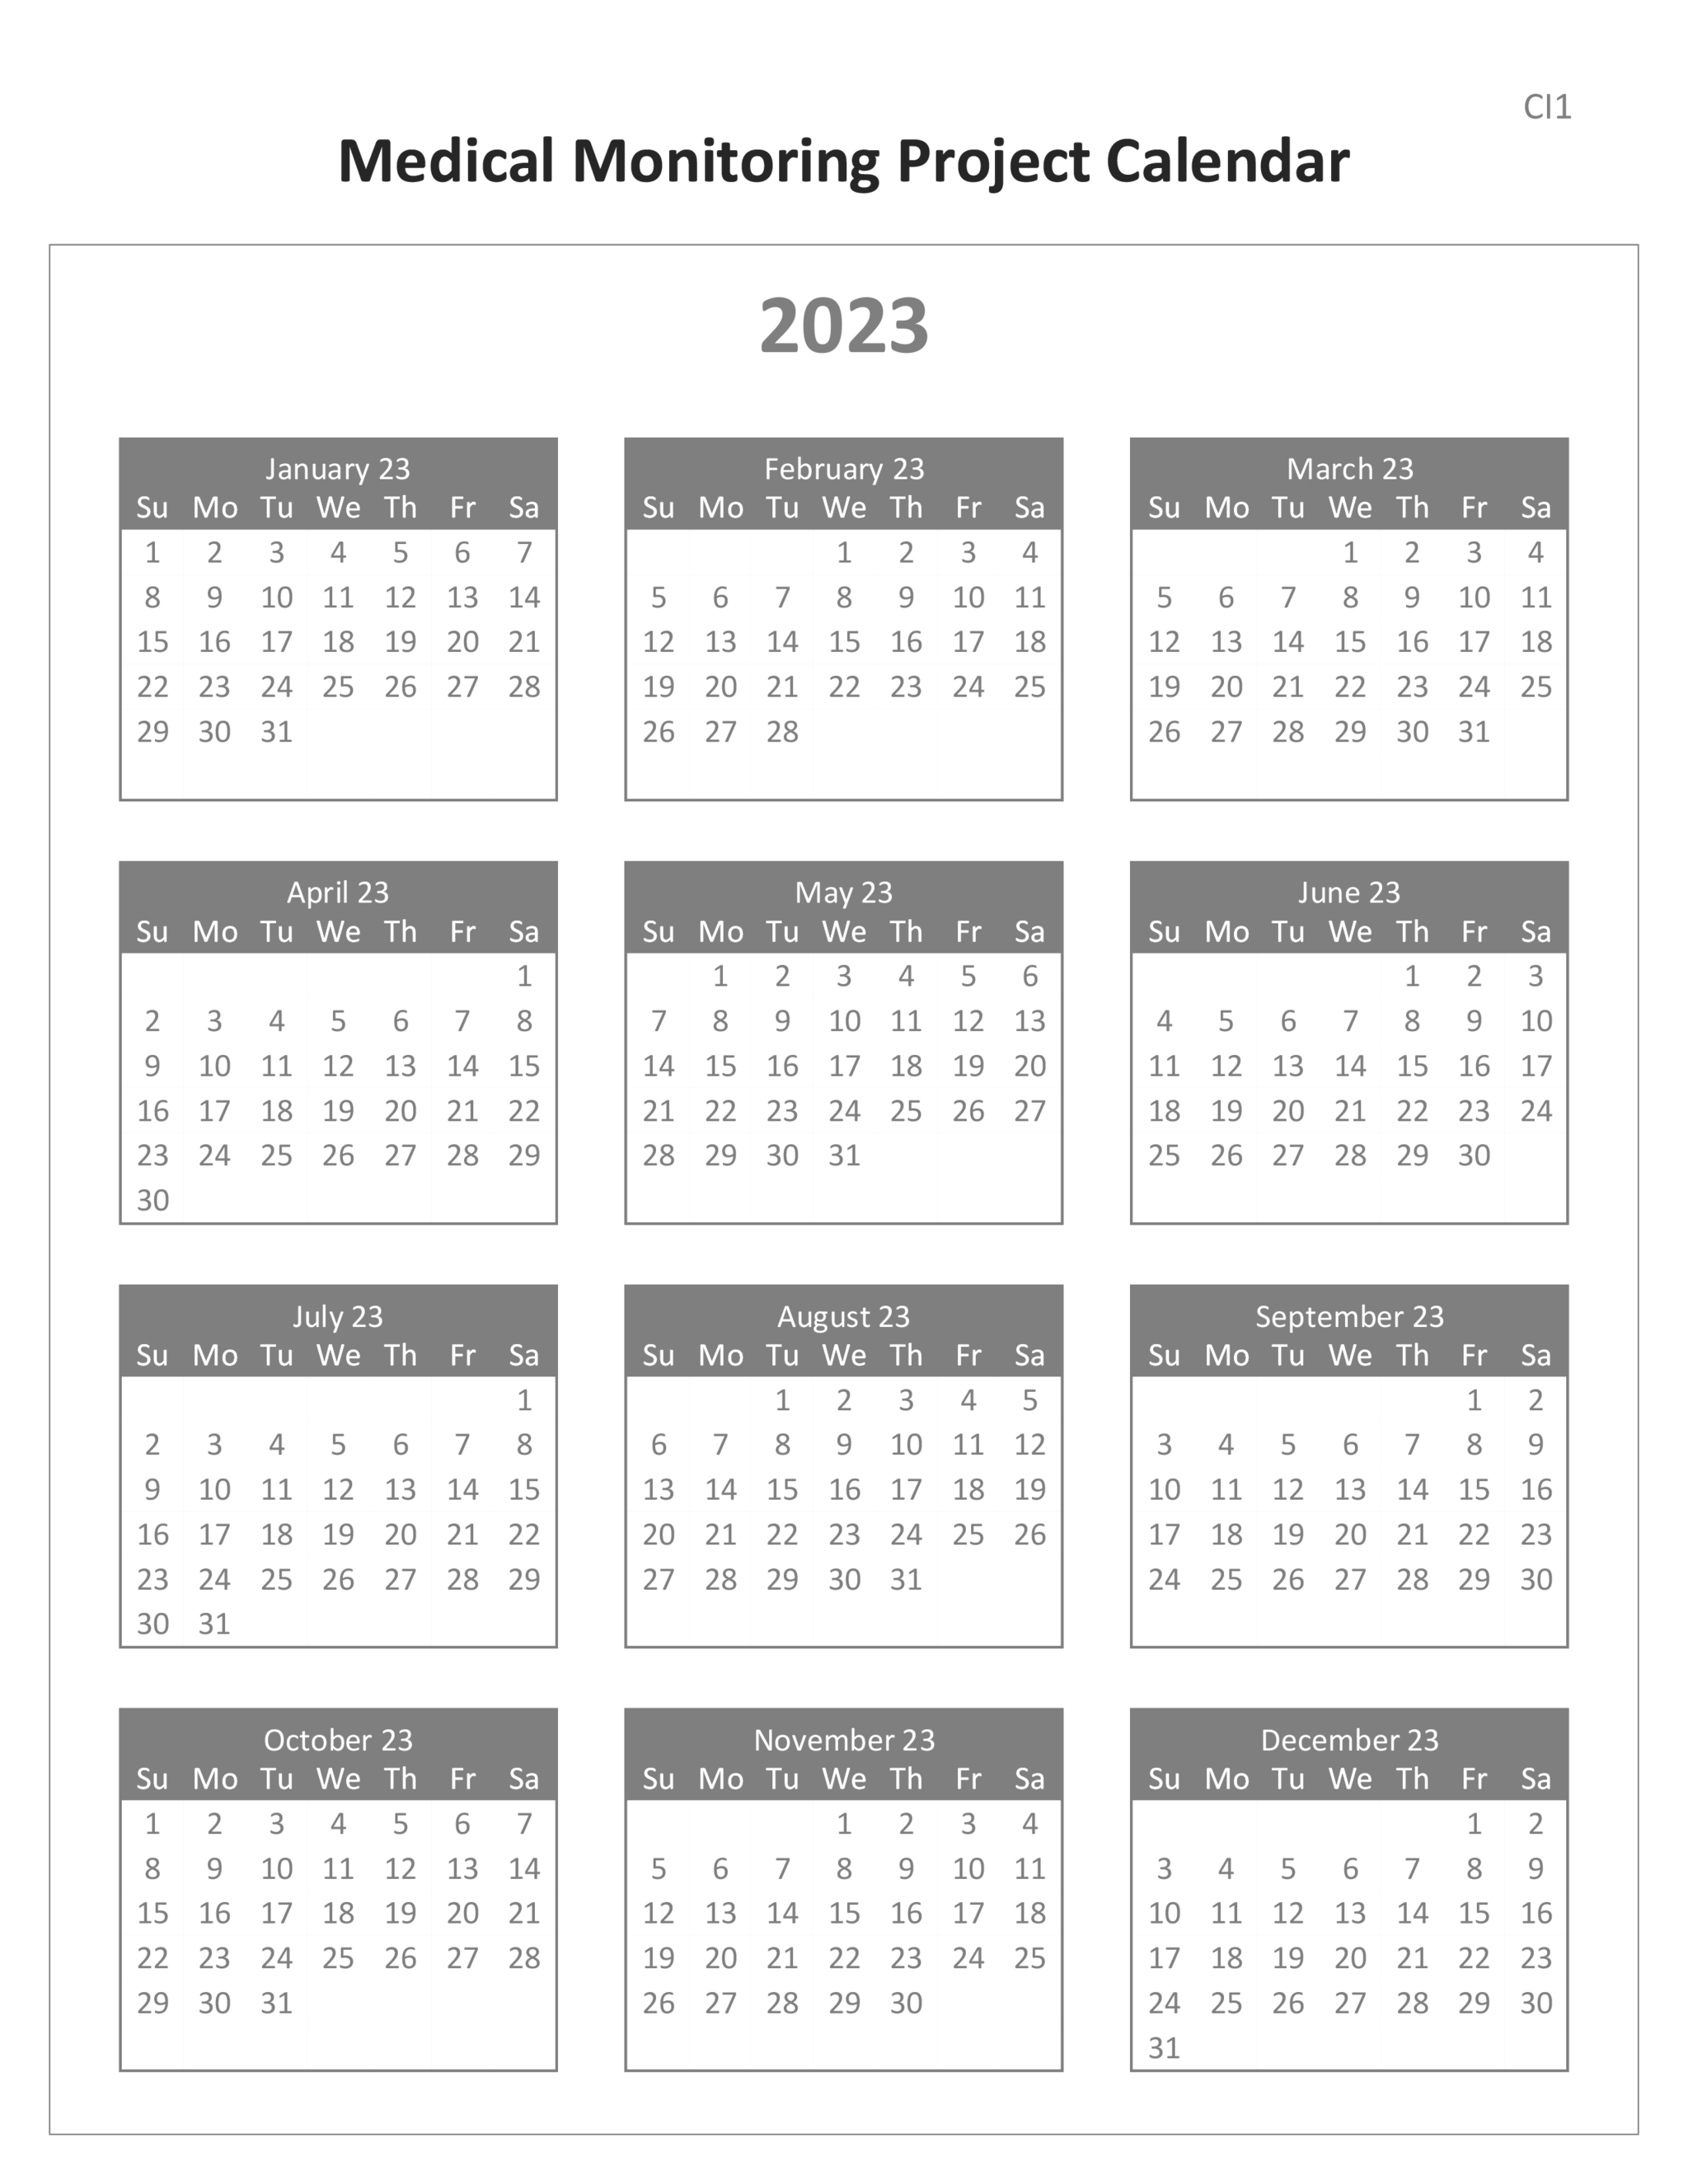 Medical Monitoring Project Calendar 2023